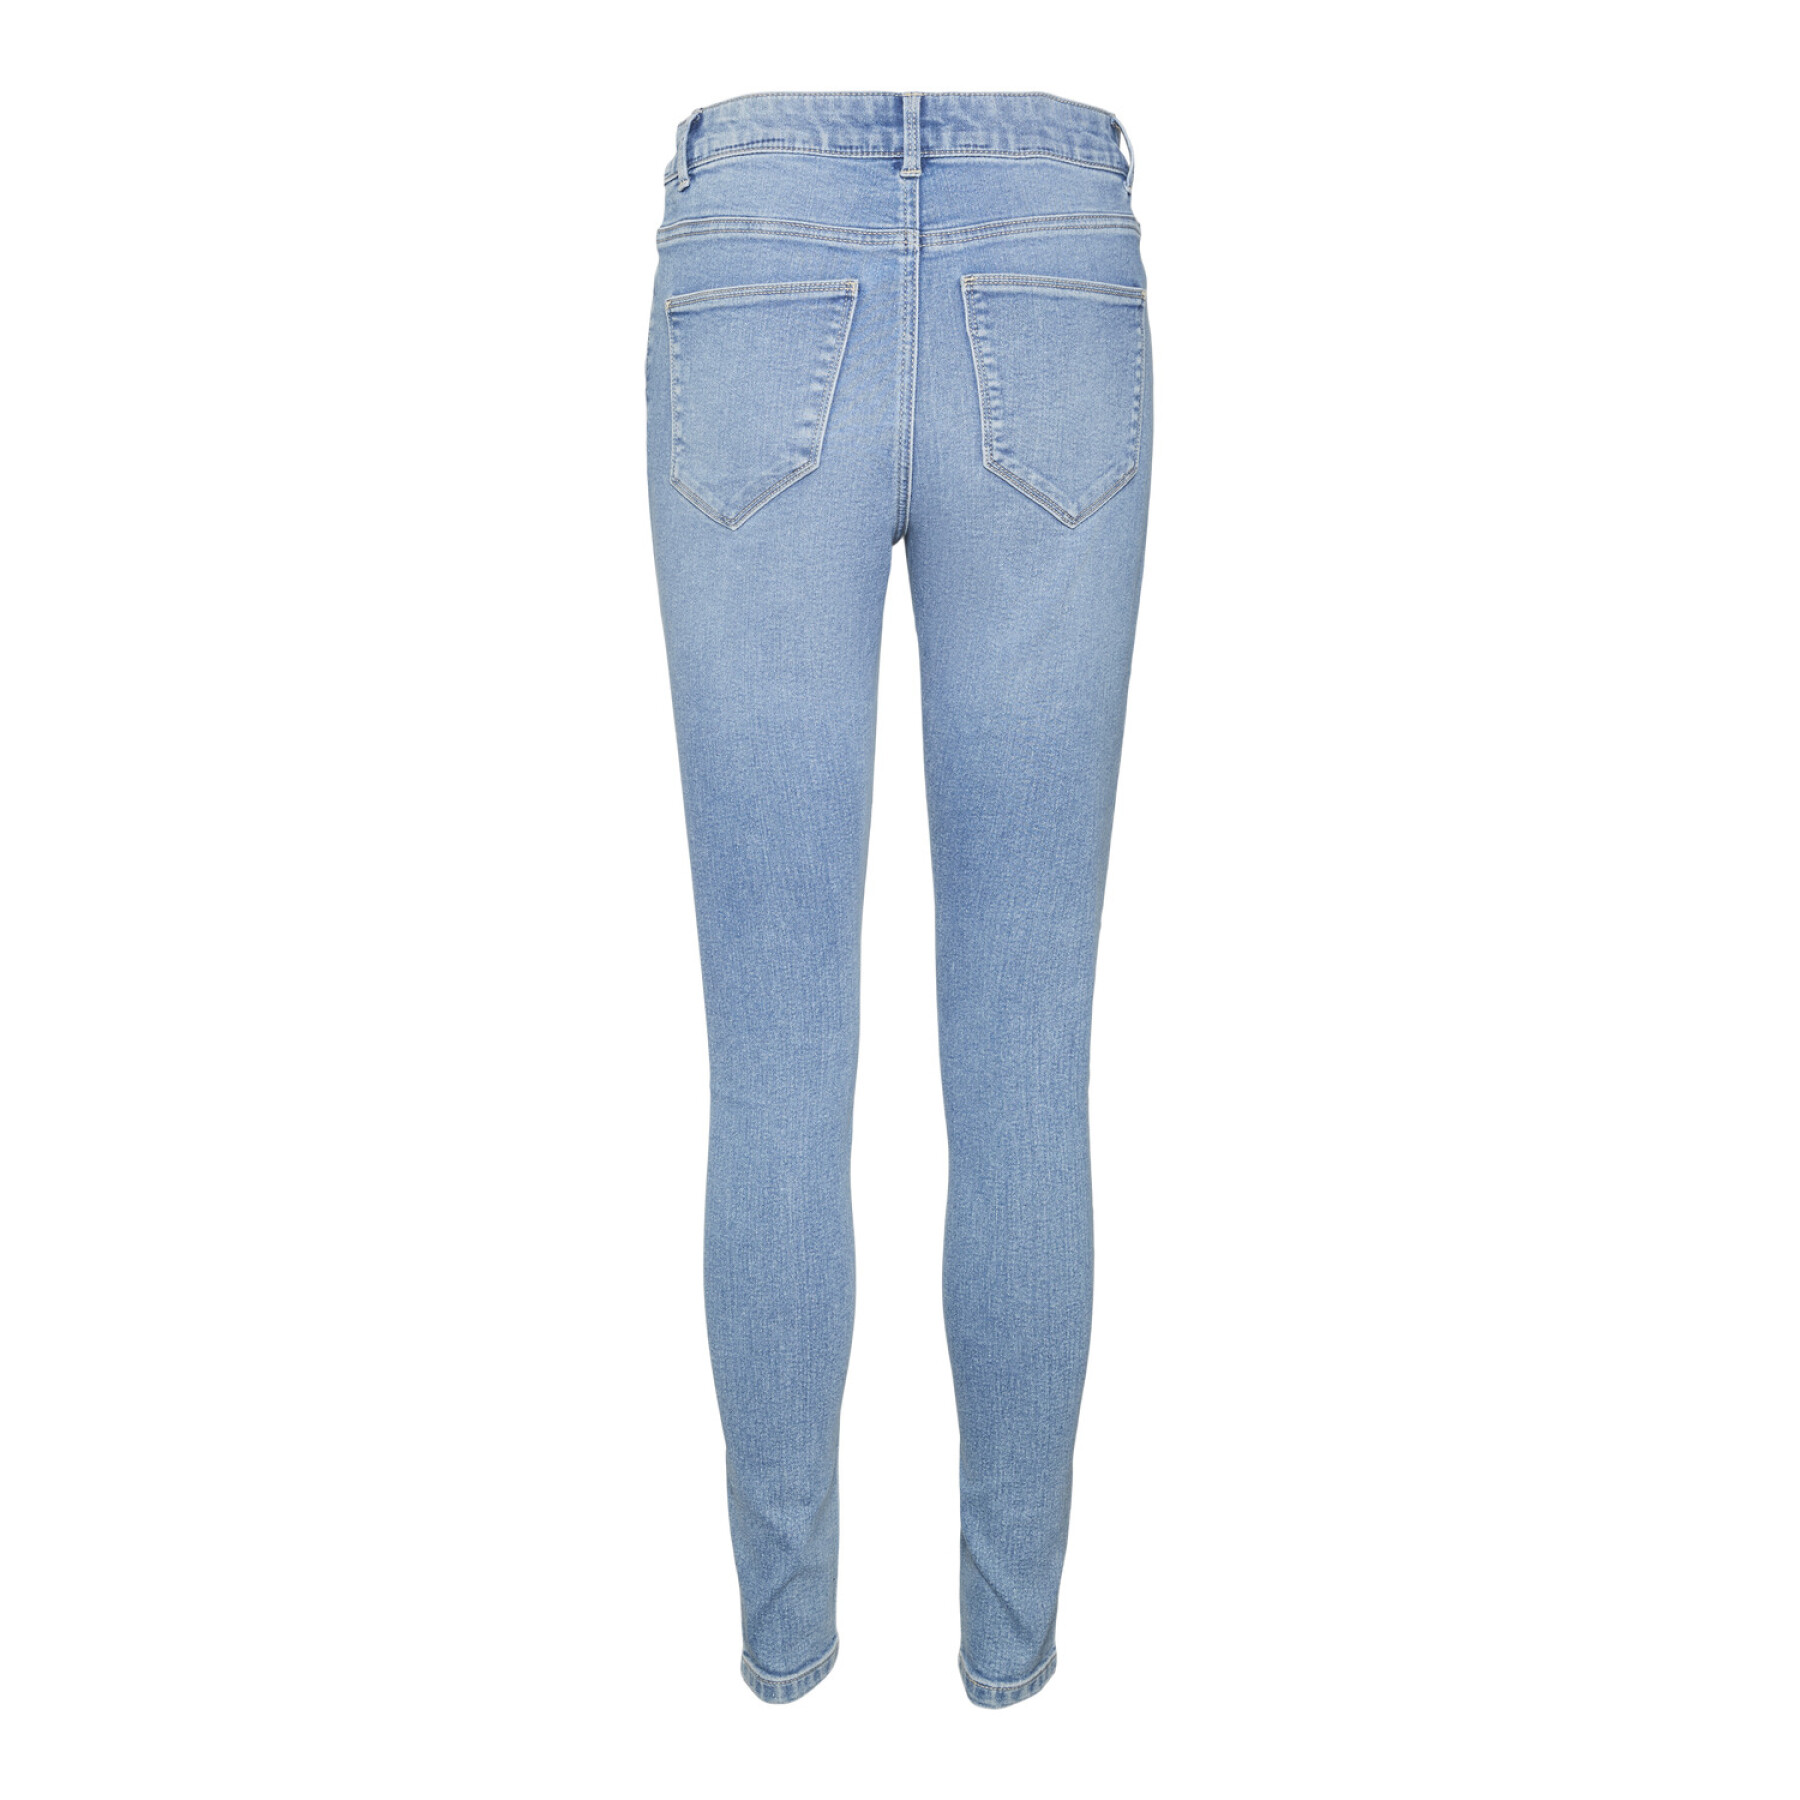 Women's skinny jeans Vero Moda Elly